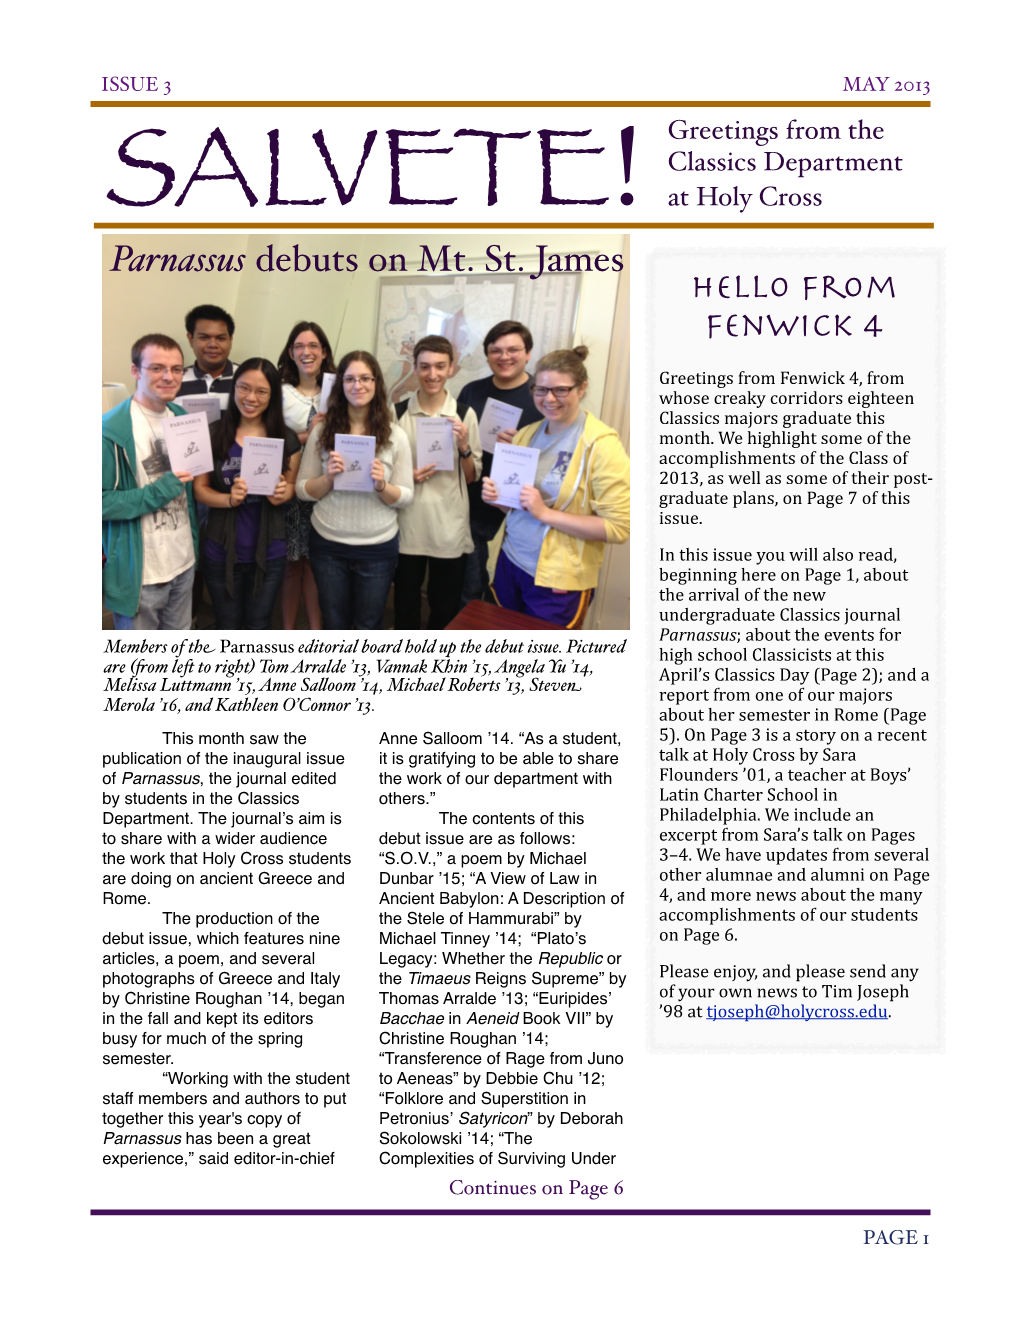 Salvete -- Issue 3